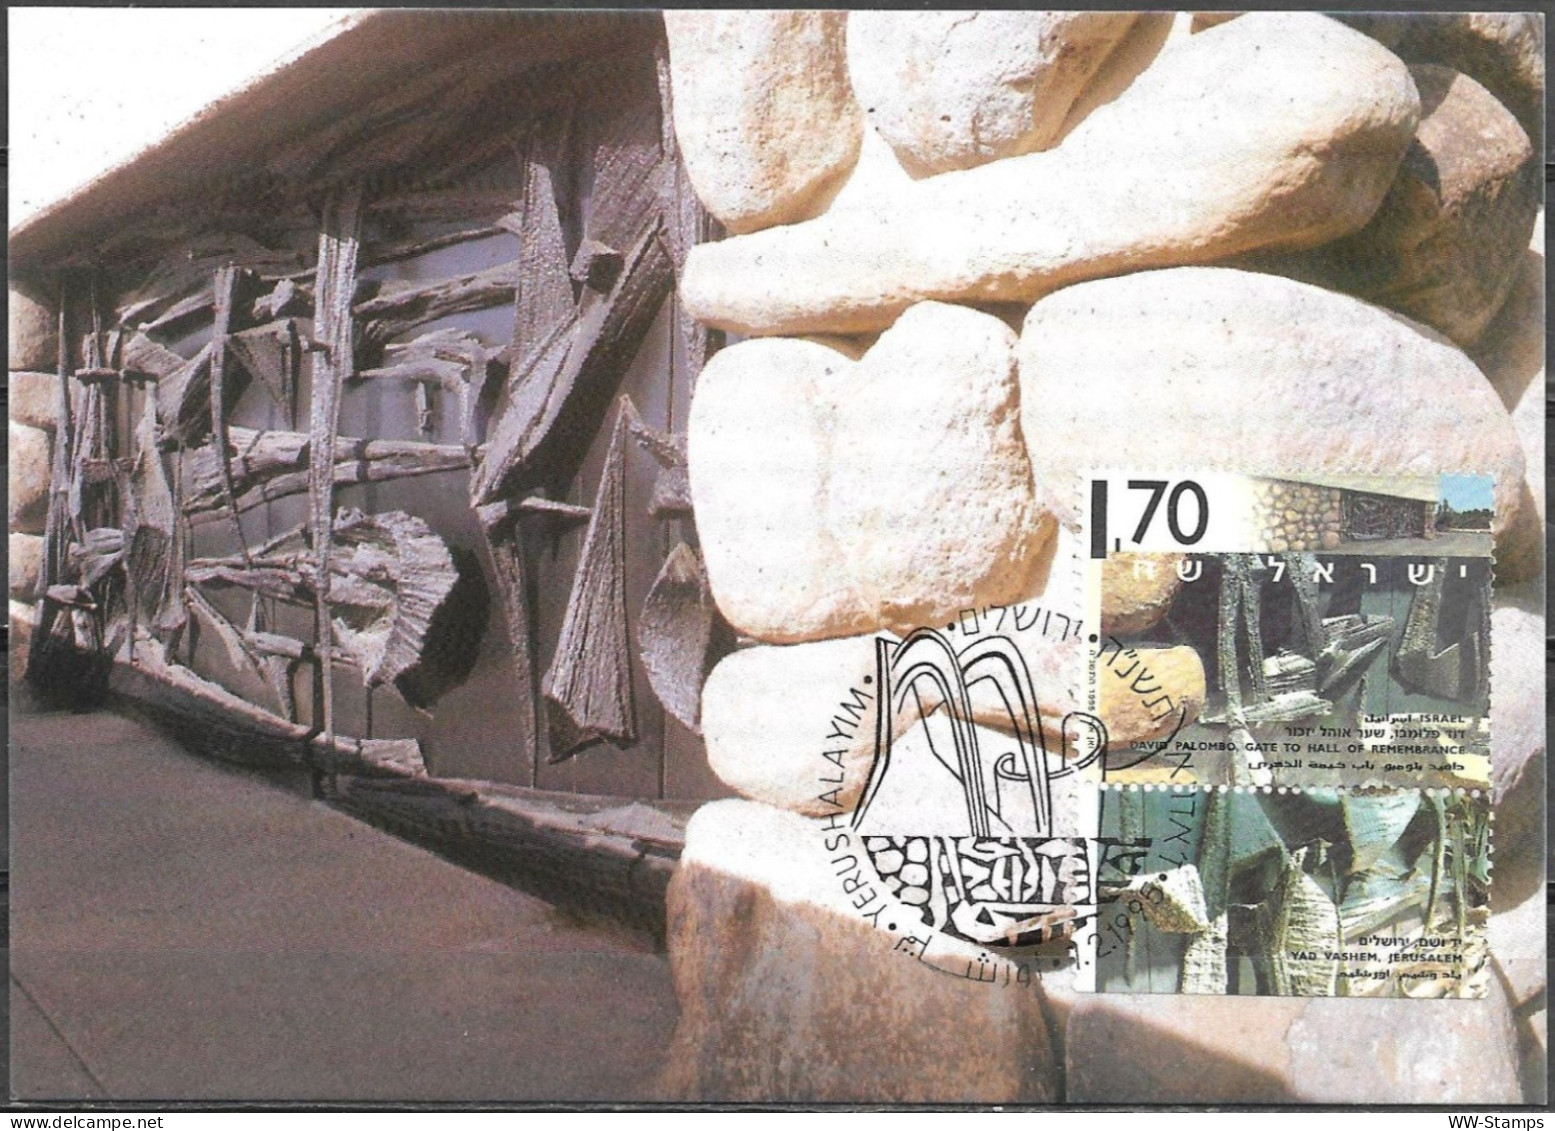 Israel 1995 Maximum Card Gate Of Yad Vashem Jerusalem David Palombo Art [ILT1645] - Covers & Documents